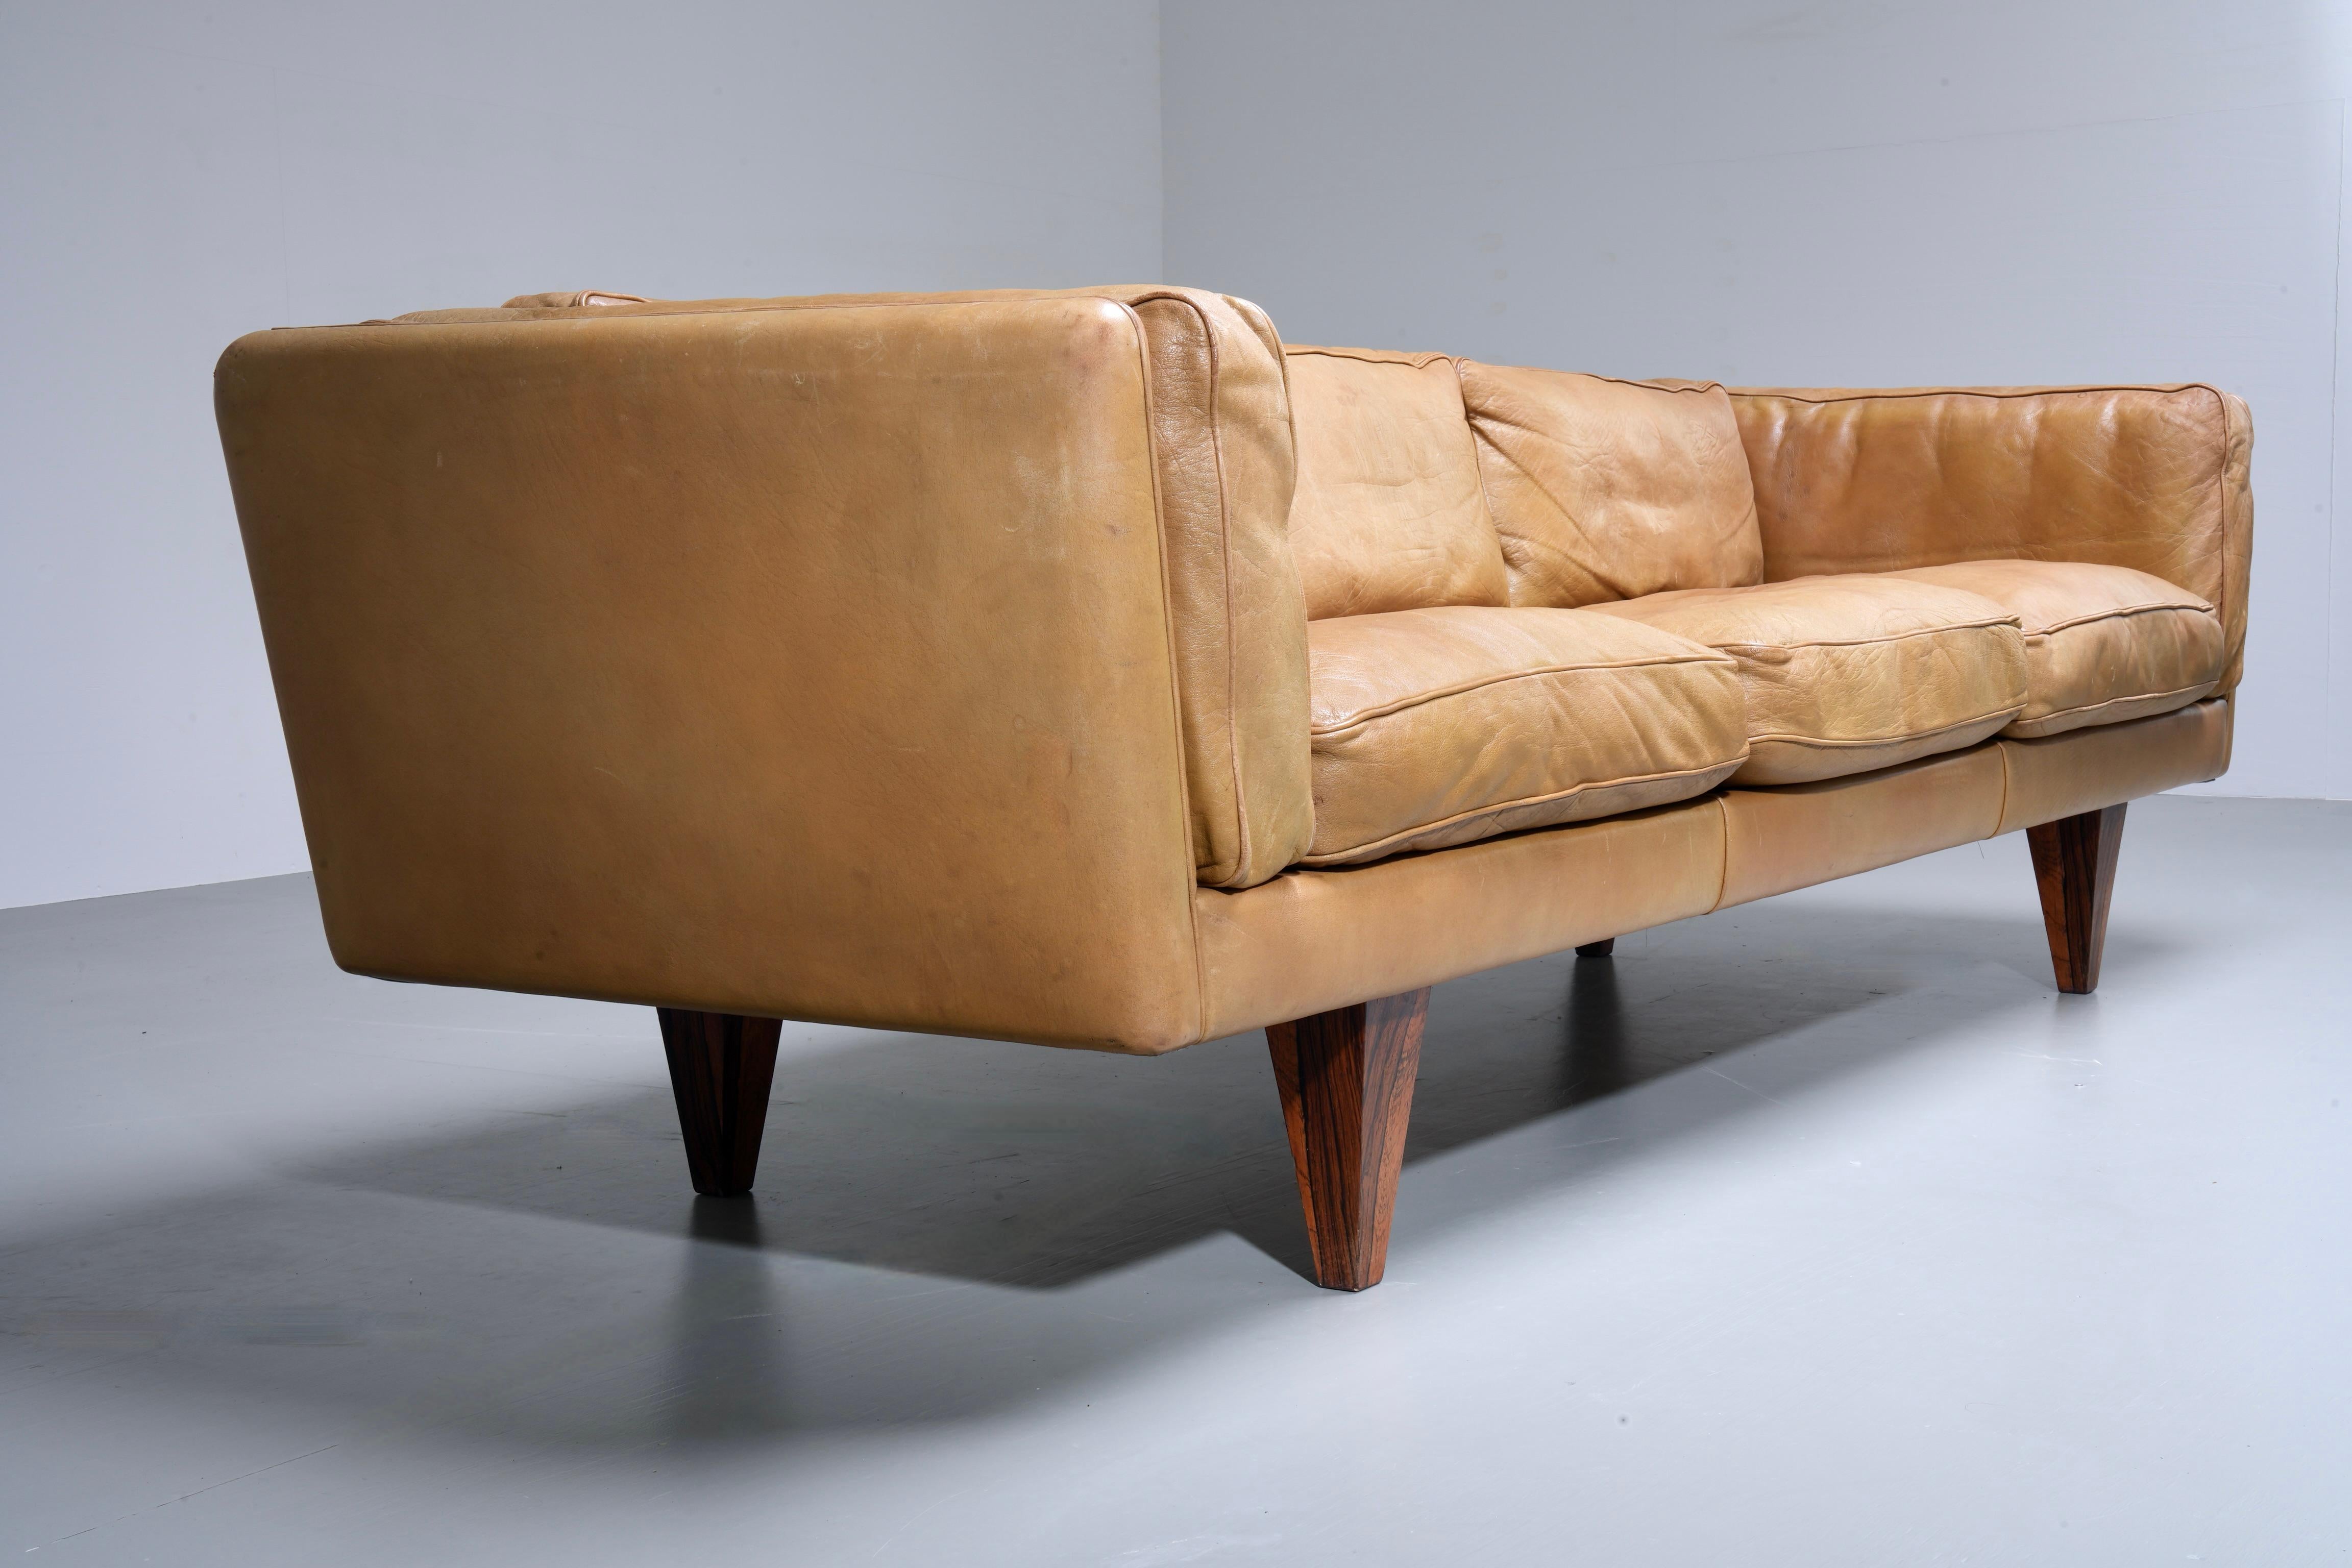 Illum Wikkelsø Dreisitziges Sofa 'V11' aus cognacfarbenem Leder, Dänemark, 1960er Jahre (Mitte des 20. Jahrhunderts) im Angebot